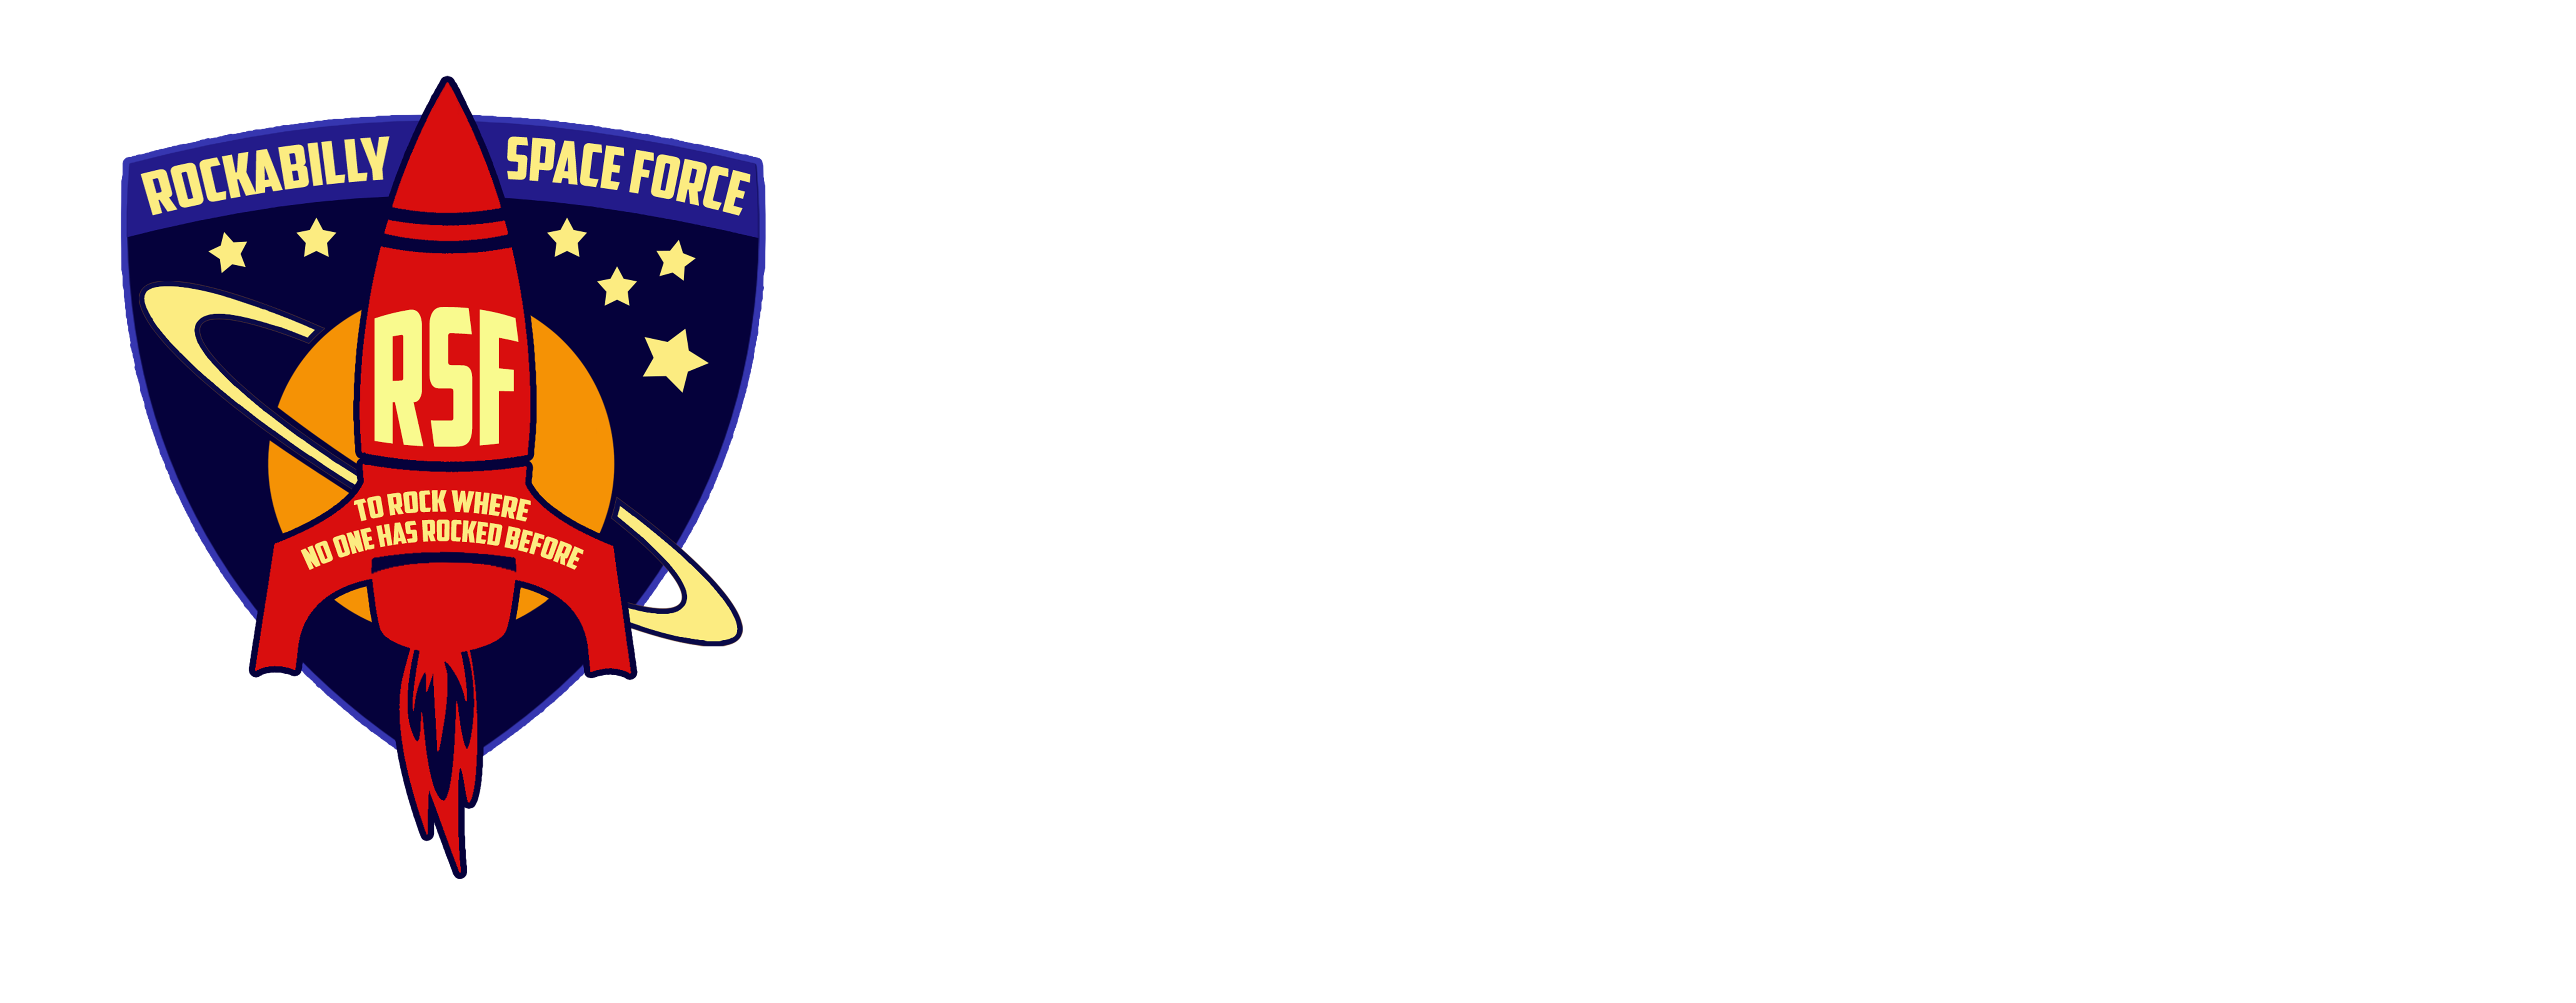 Rockabilly Space Force